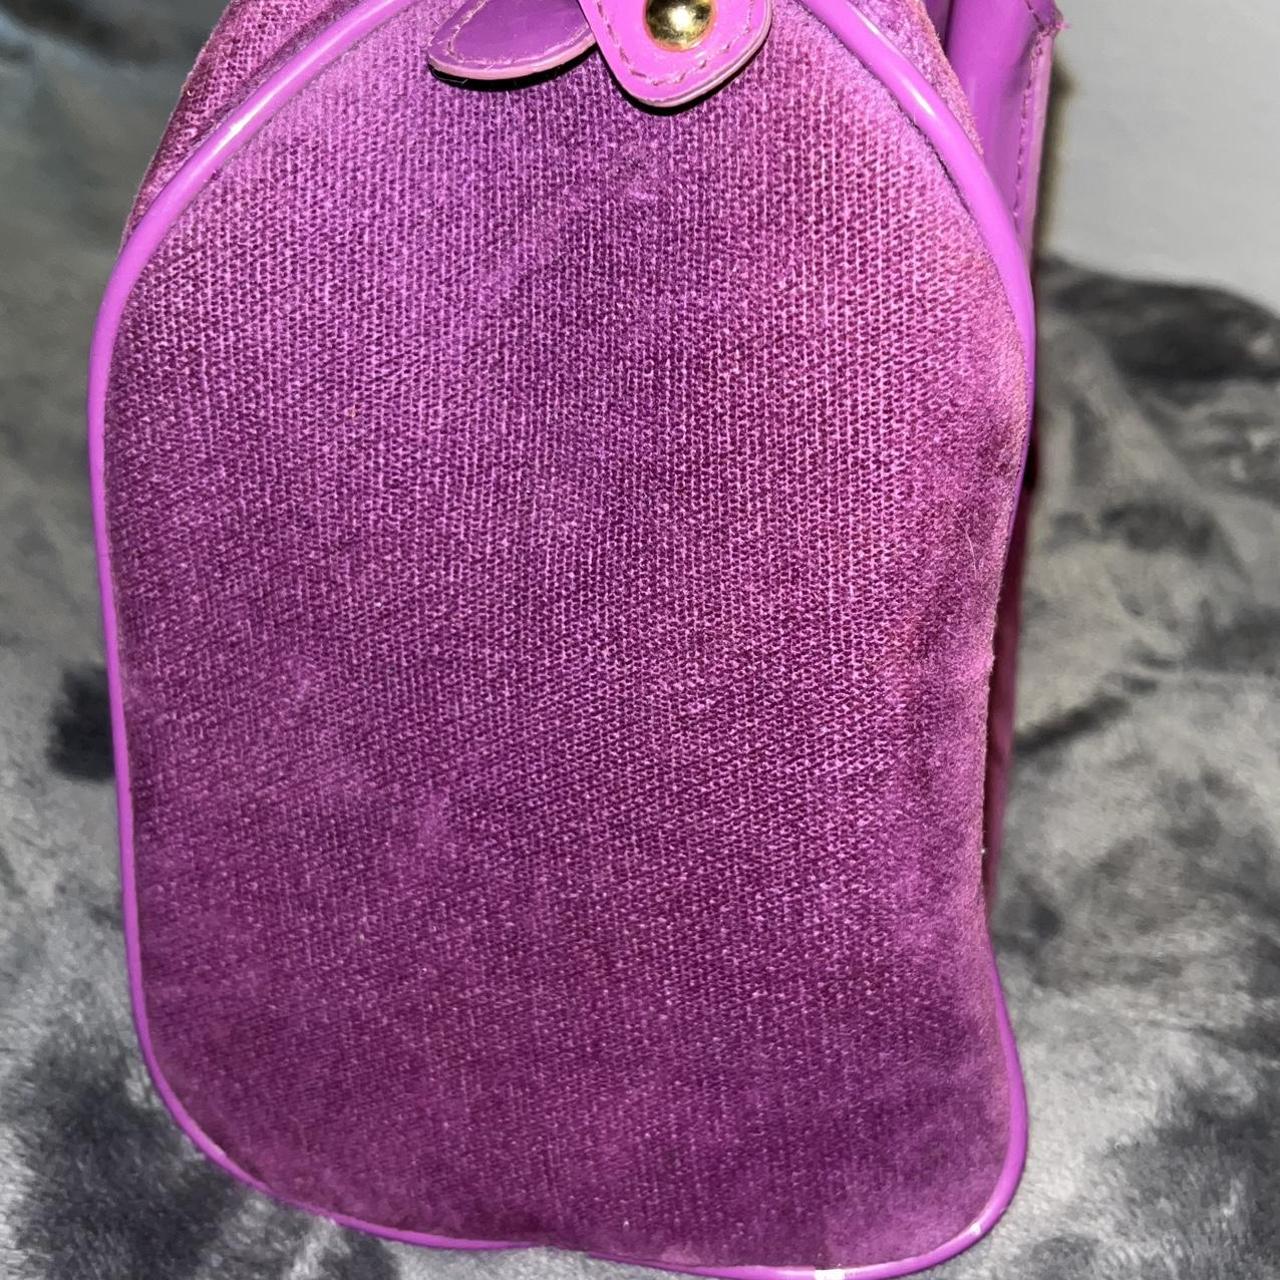 Super cute Victoria's Secret bowling bag.